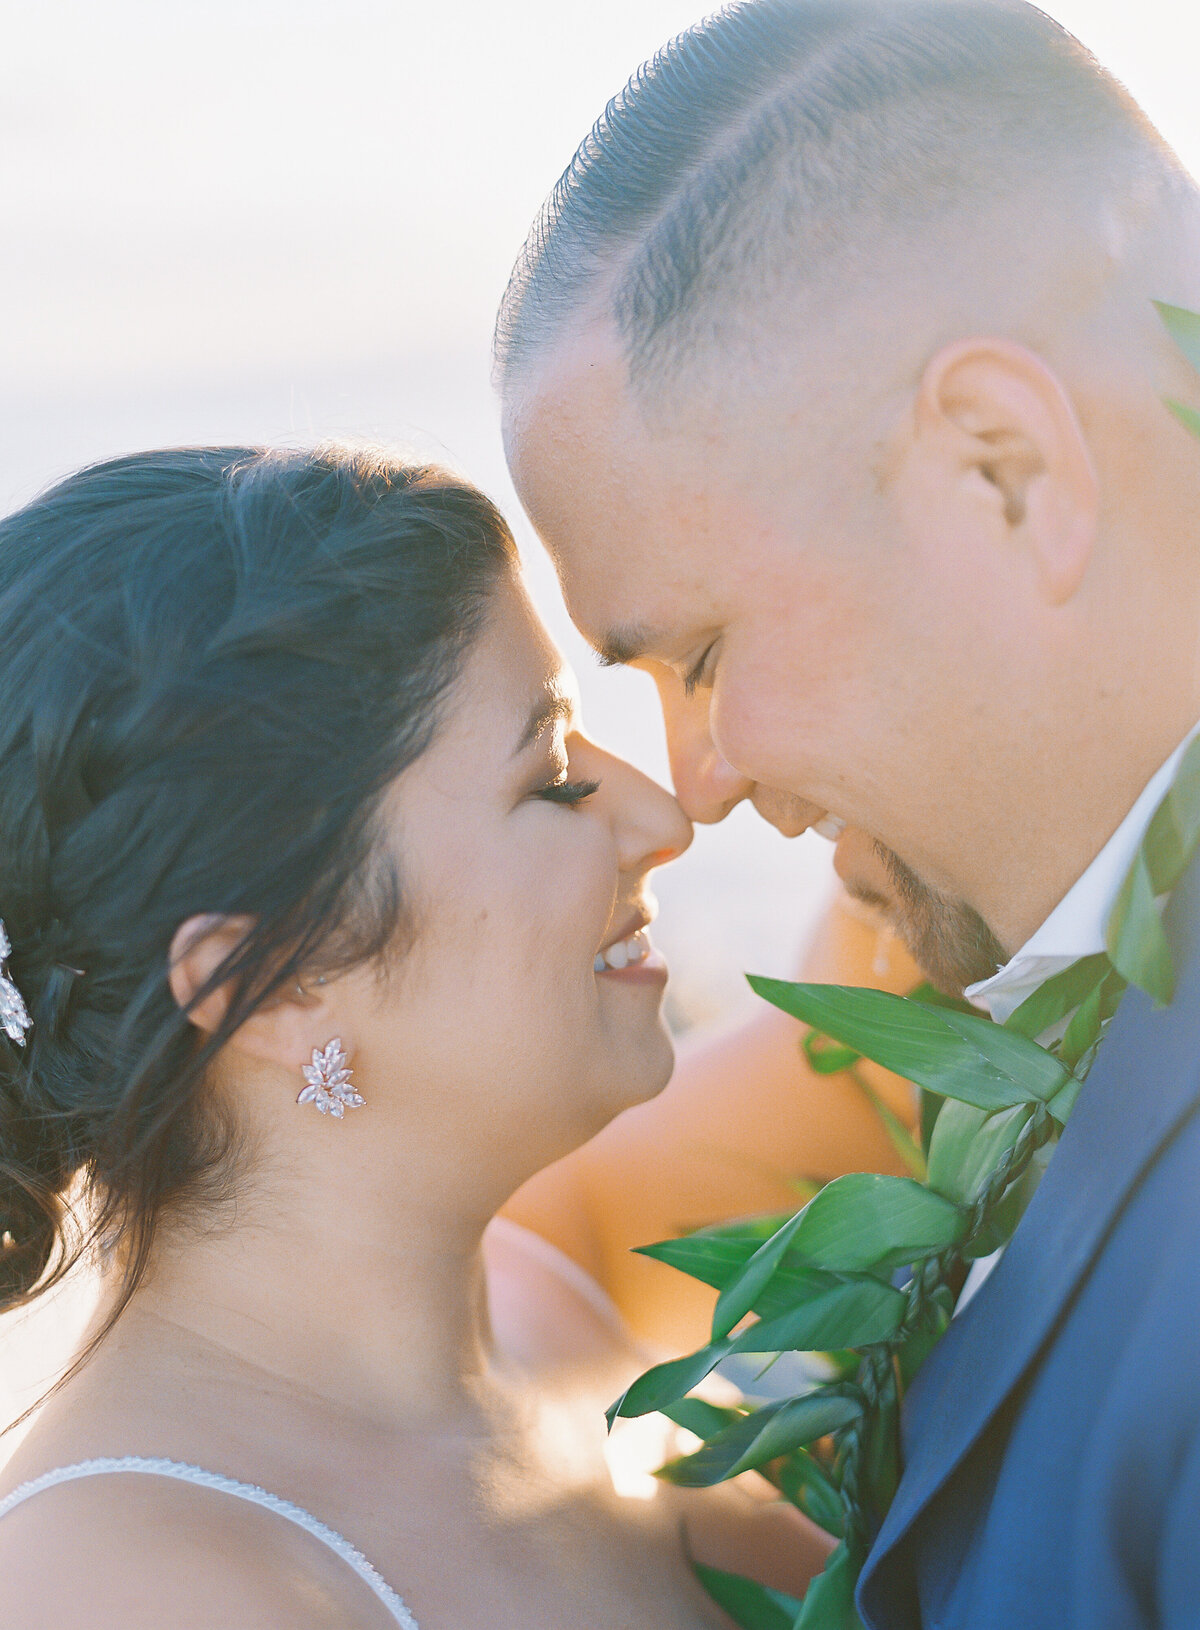 Maui Love Weddings and Events Maui Hawaii Full Service Wedding Planning Coordinating Event Design Company Destination Wedding 16